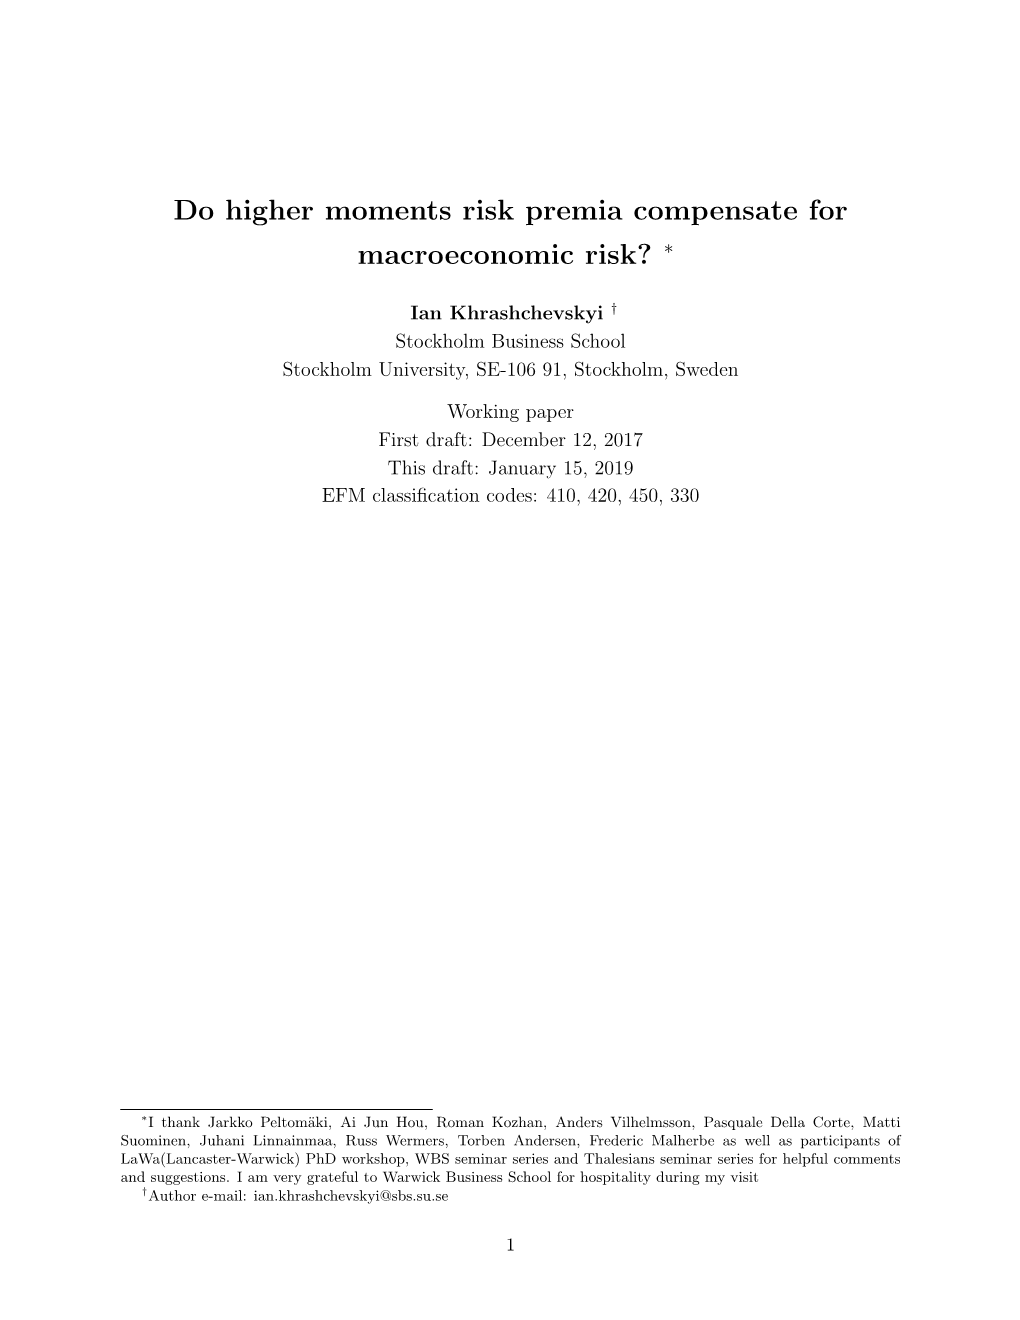 Do Higher Moments Risk Premia Compensate for Macroeconomic Risk? ∗